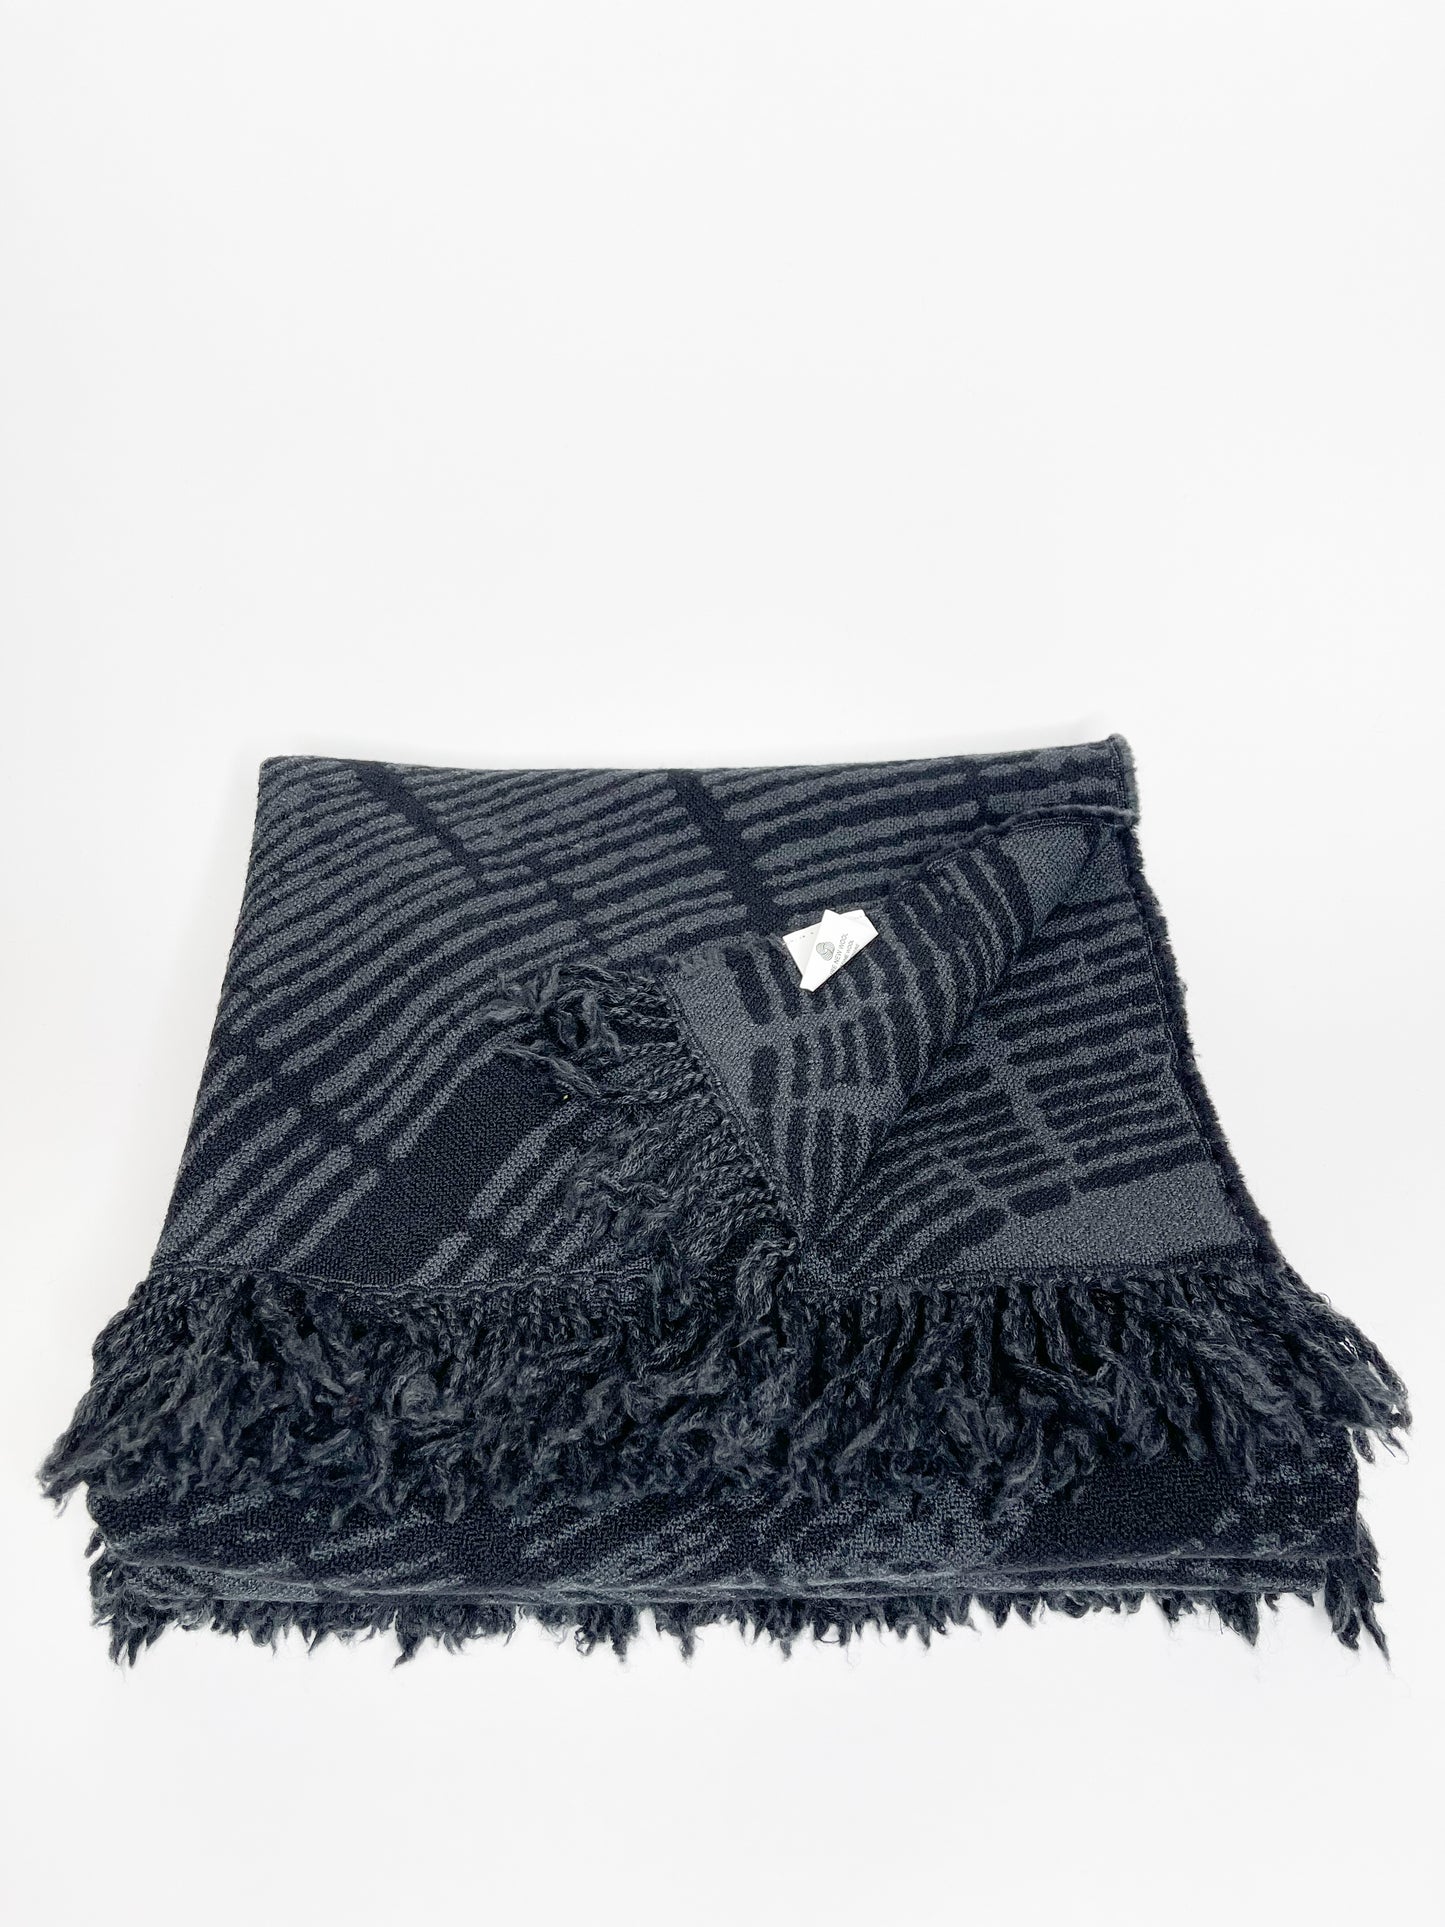 Merino wool blanket "Black Forest"